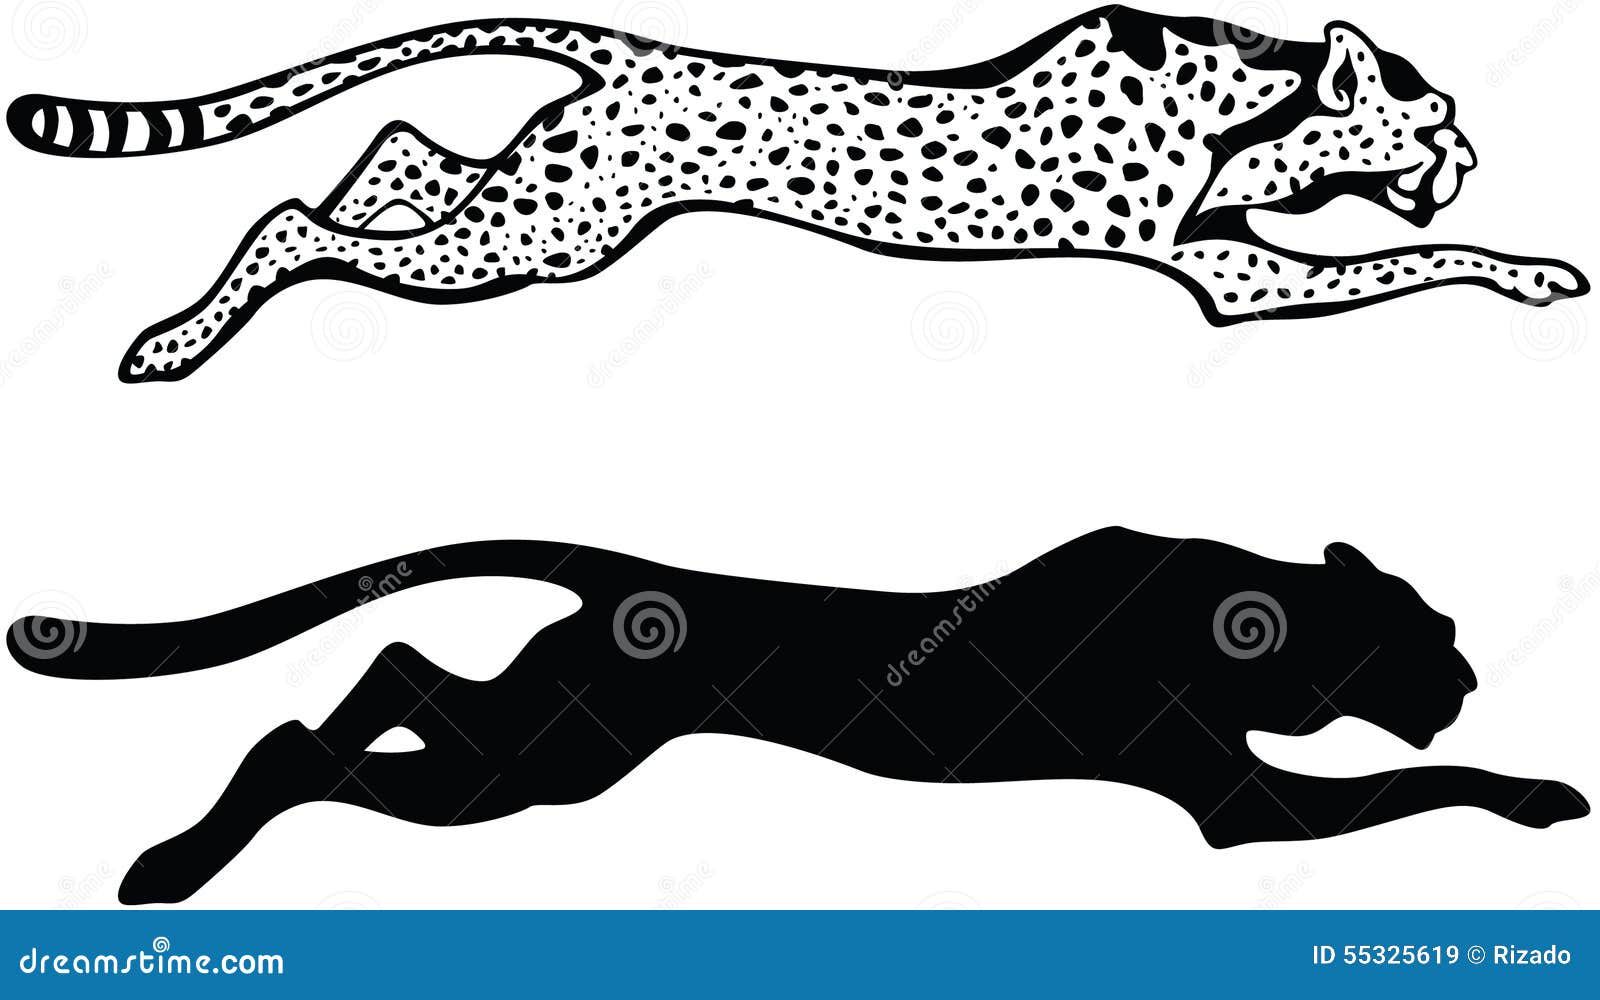 Download Running Cheetah stock vector. Illustration of creature - 55325619